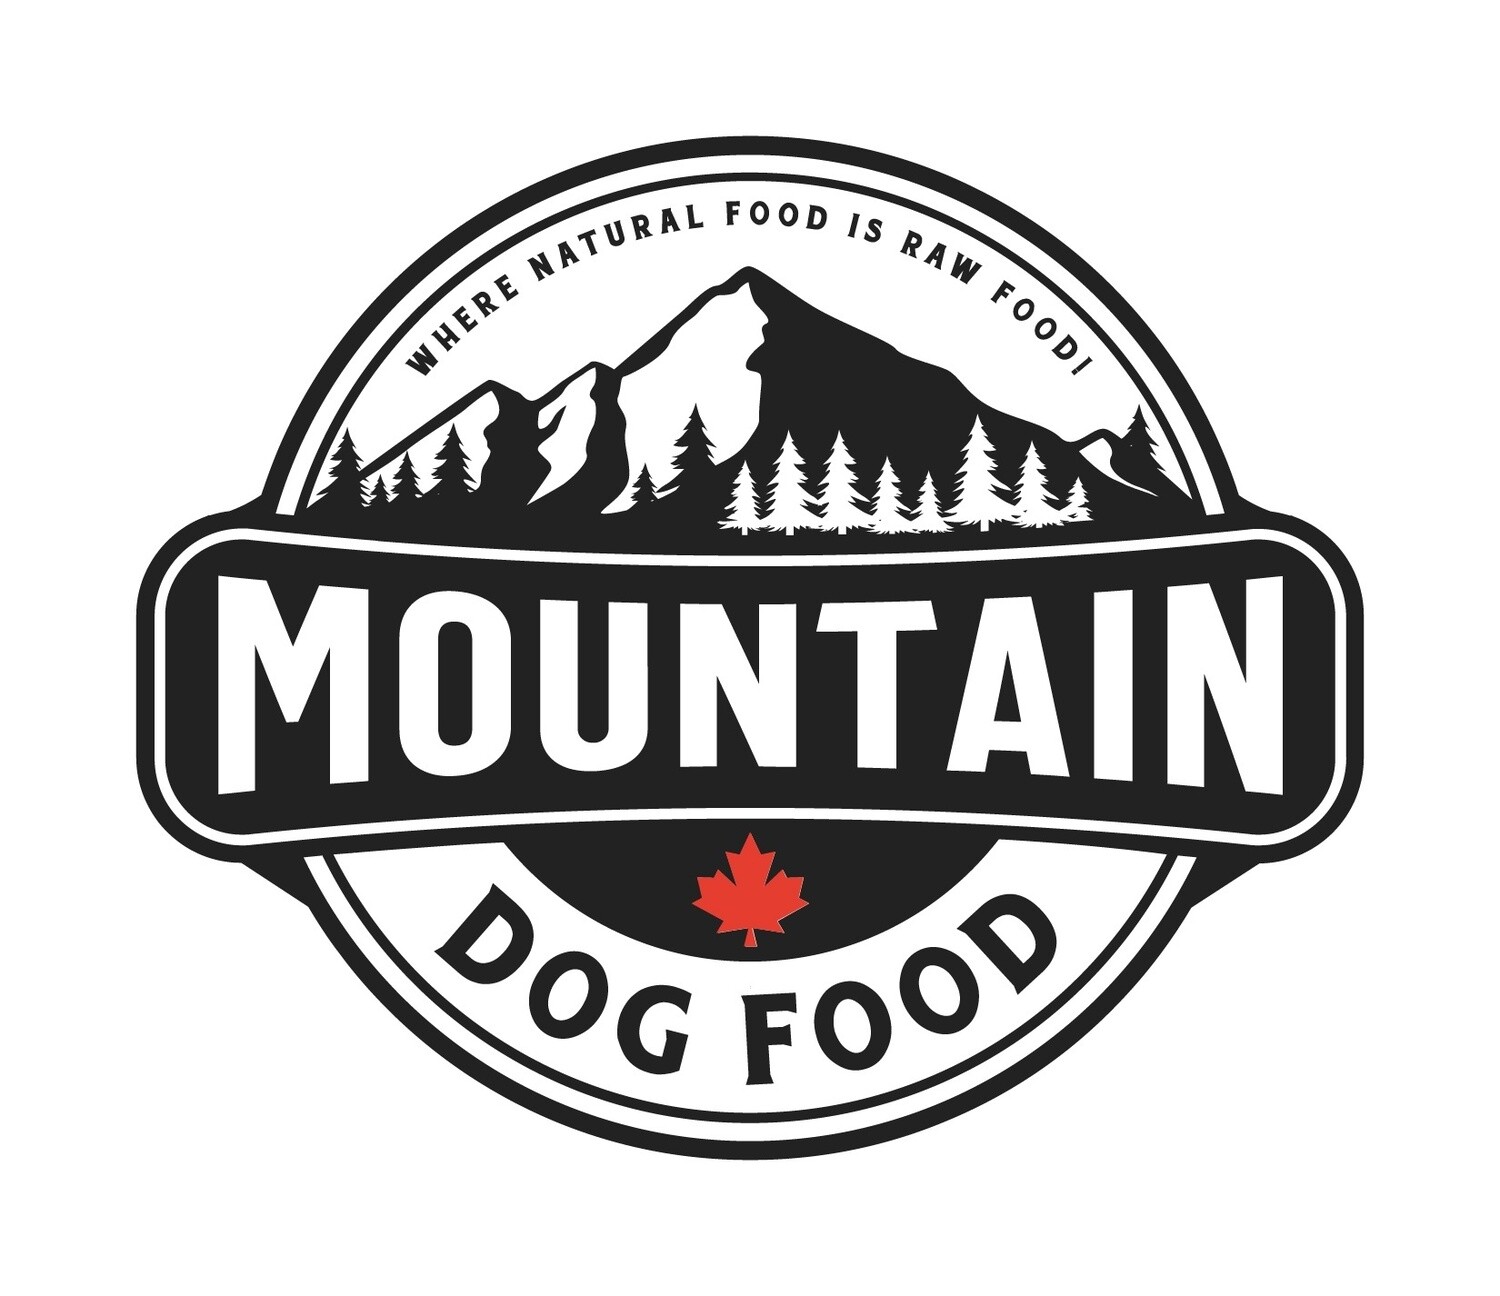 MOUNTAIN DOG Beef Vege & Fruit 2lb